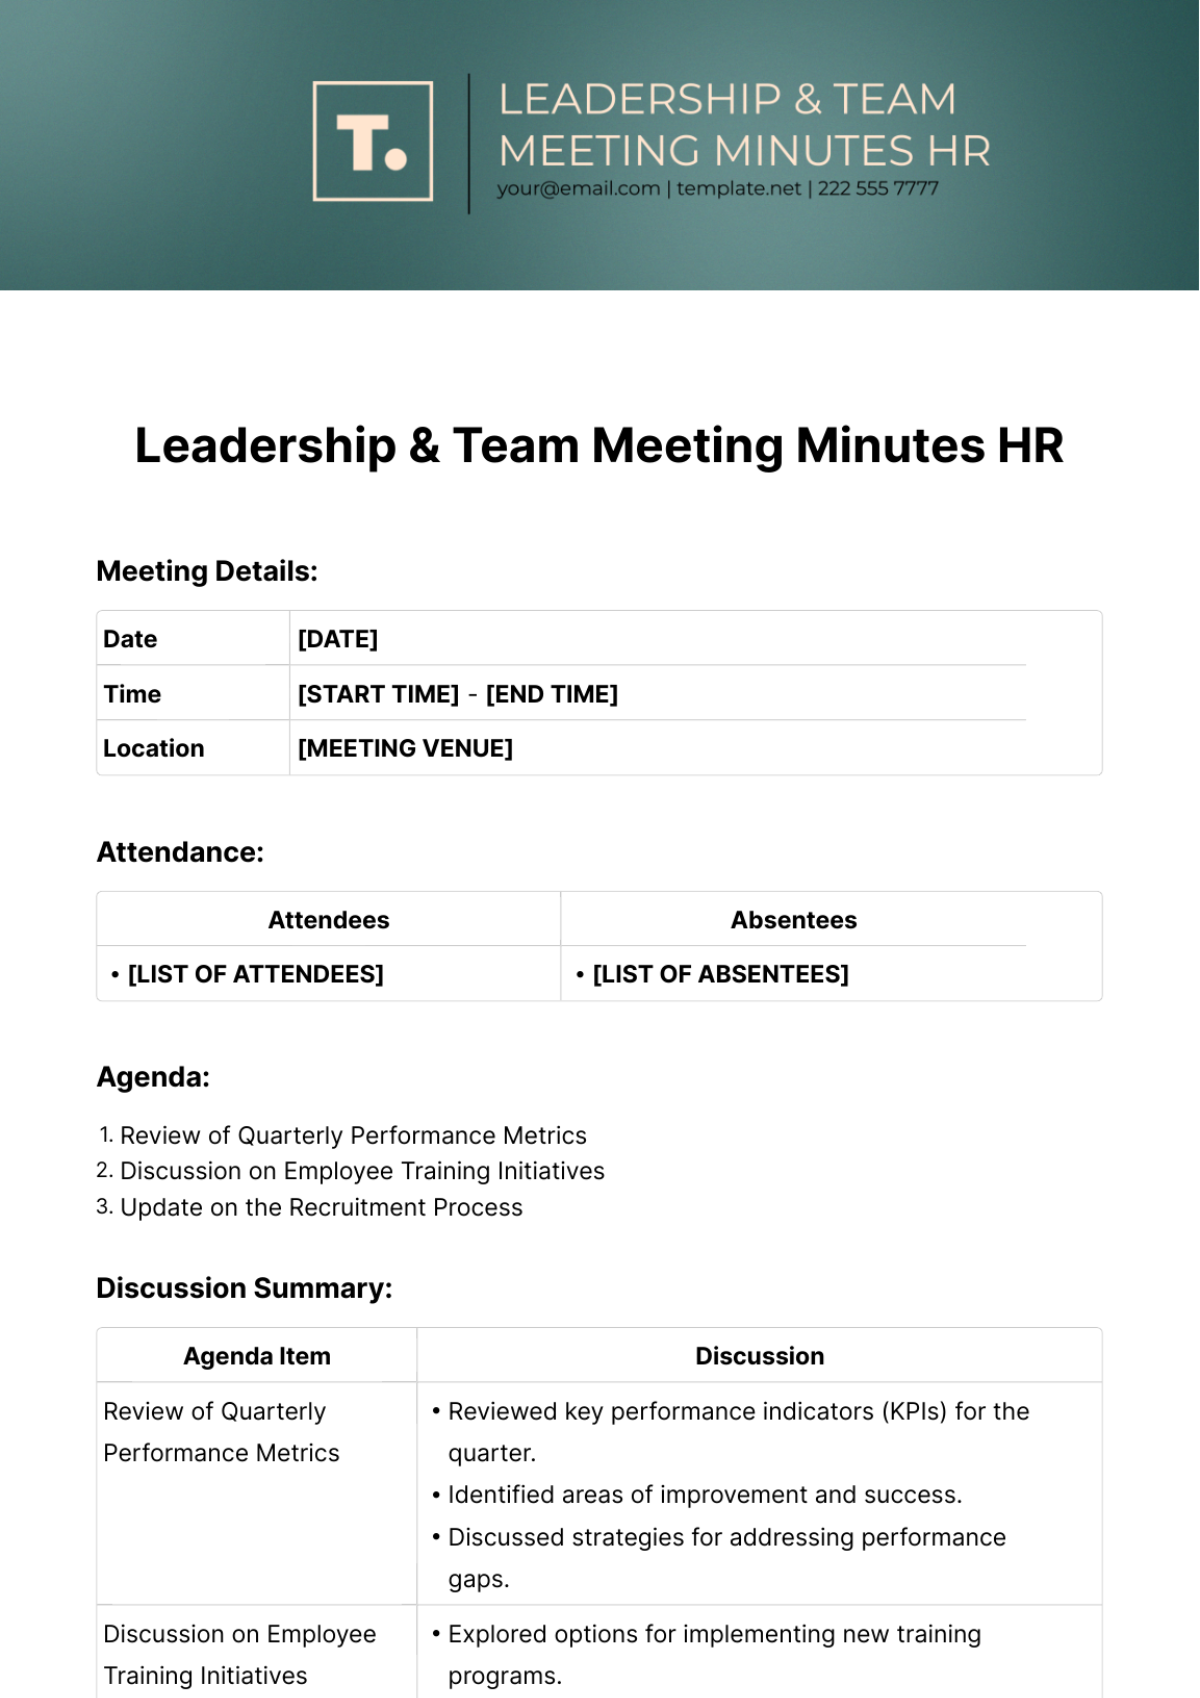 Leadership & Team Meeting Minutes HR Template